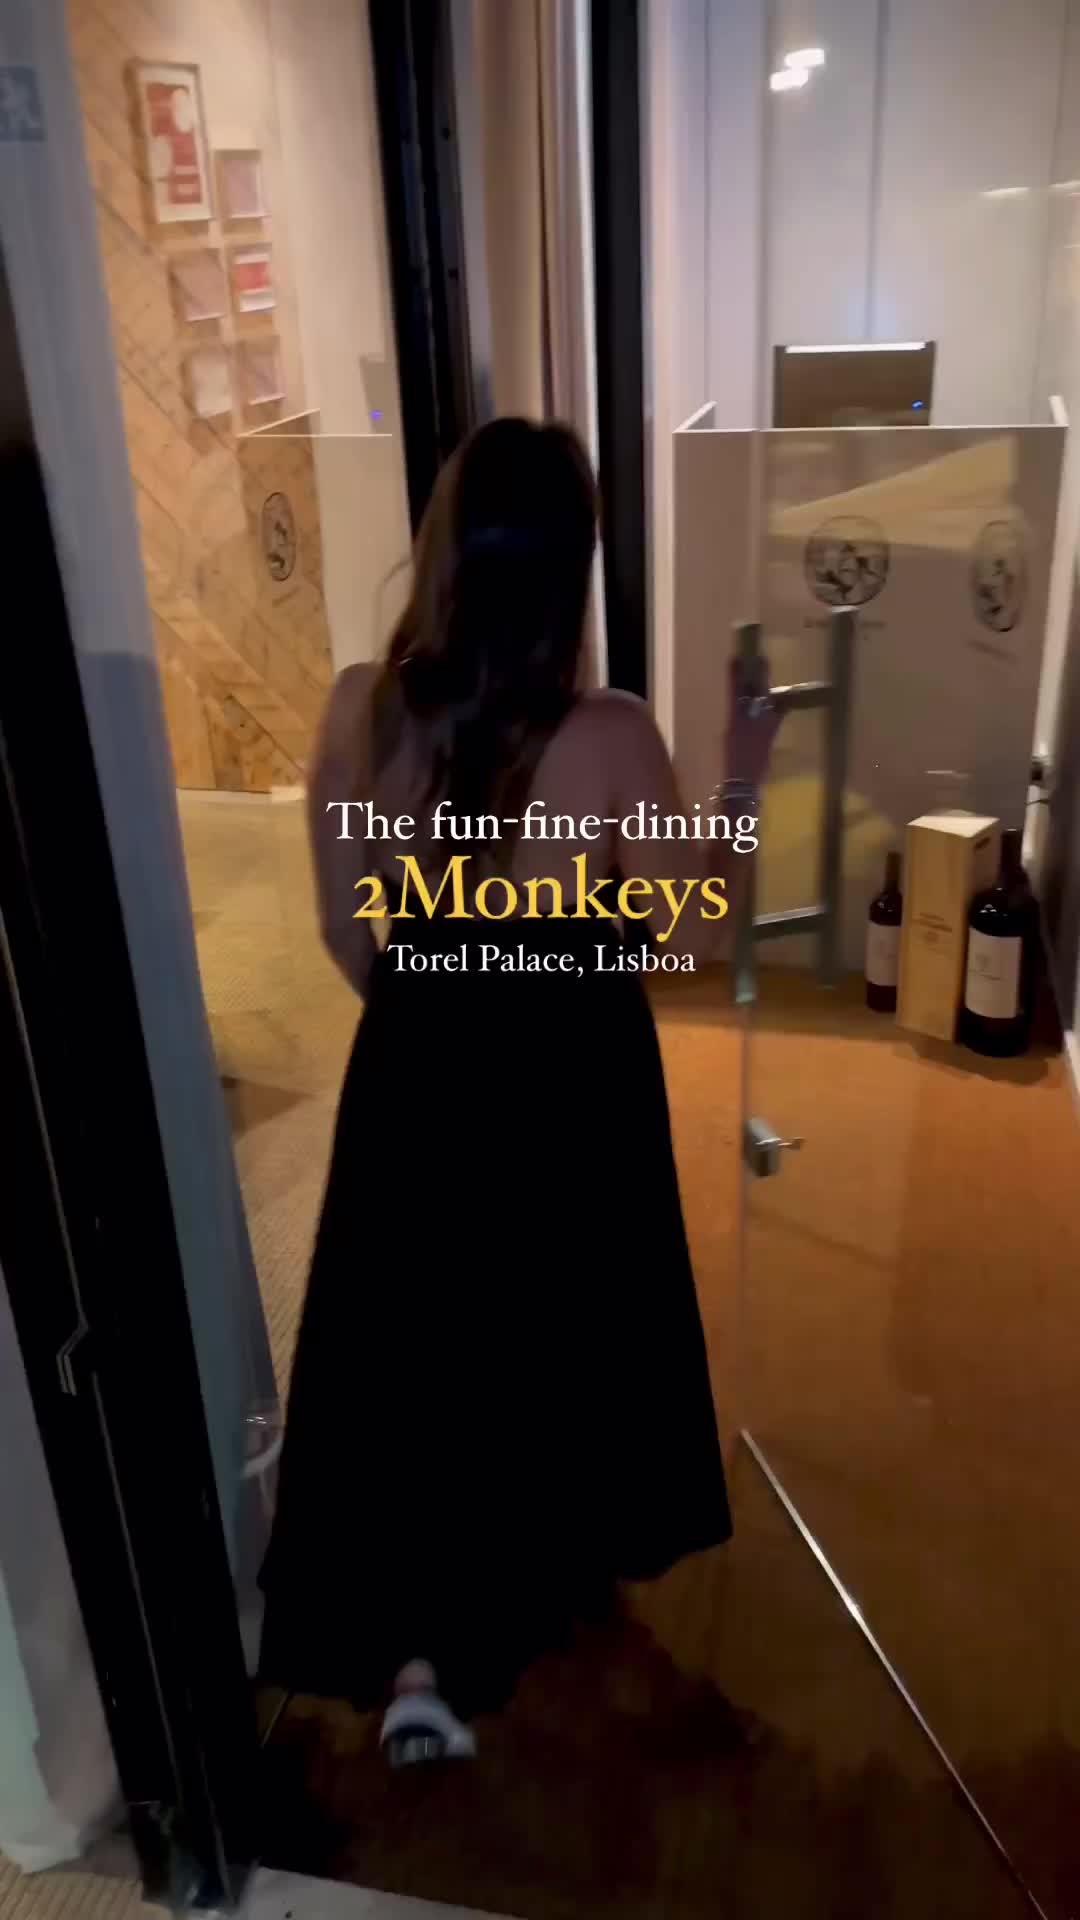 Fun-Fine Dining at 2 Monkeys Restaurant in Lisbon